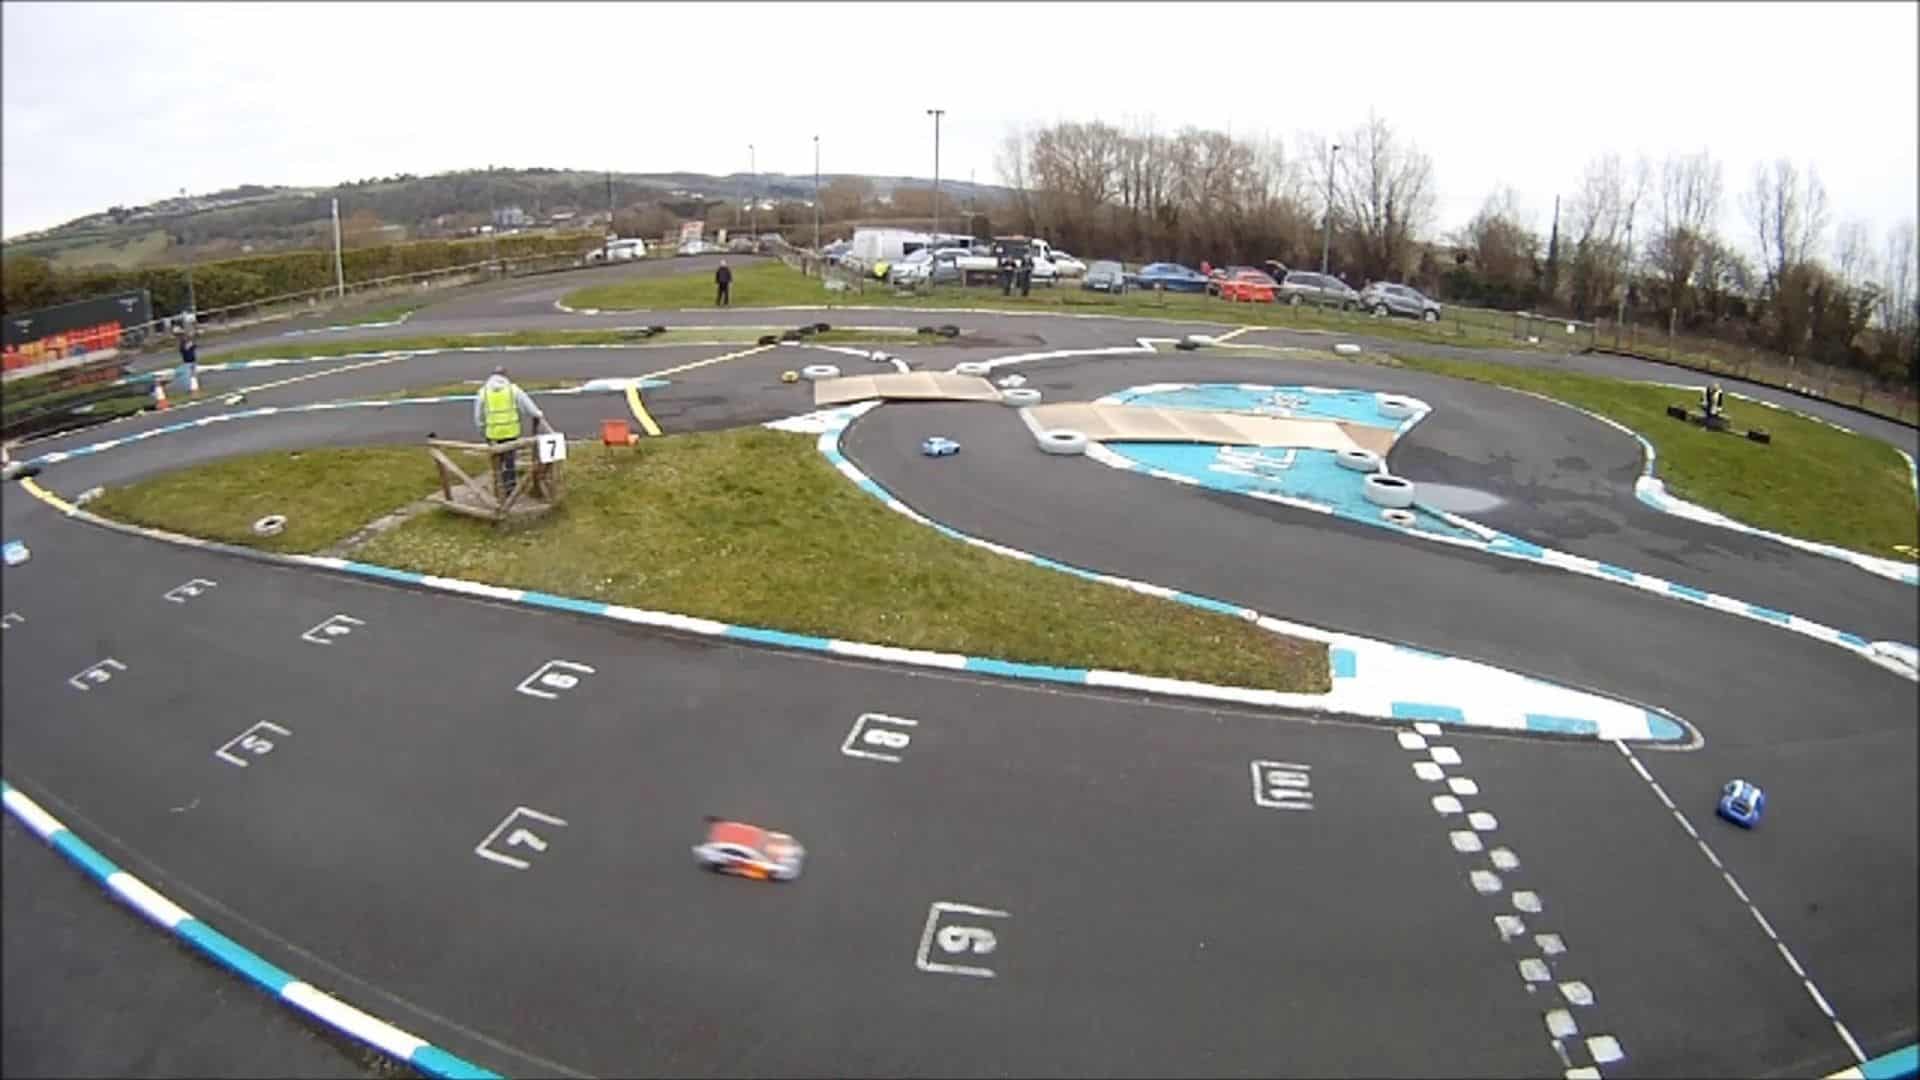 Mendip RC Raceway in UK